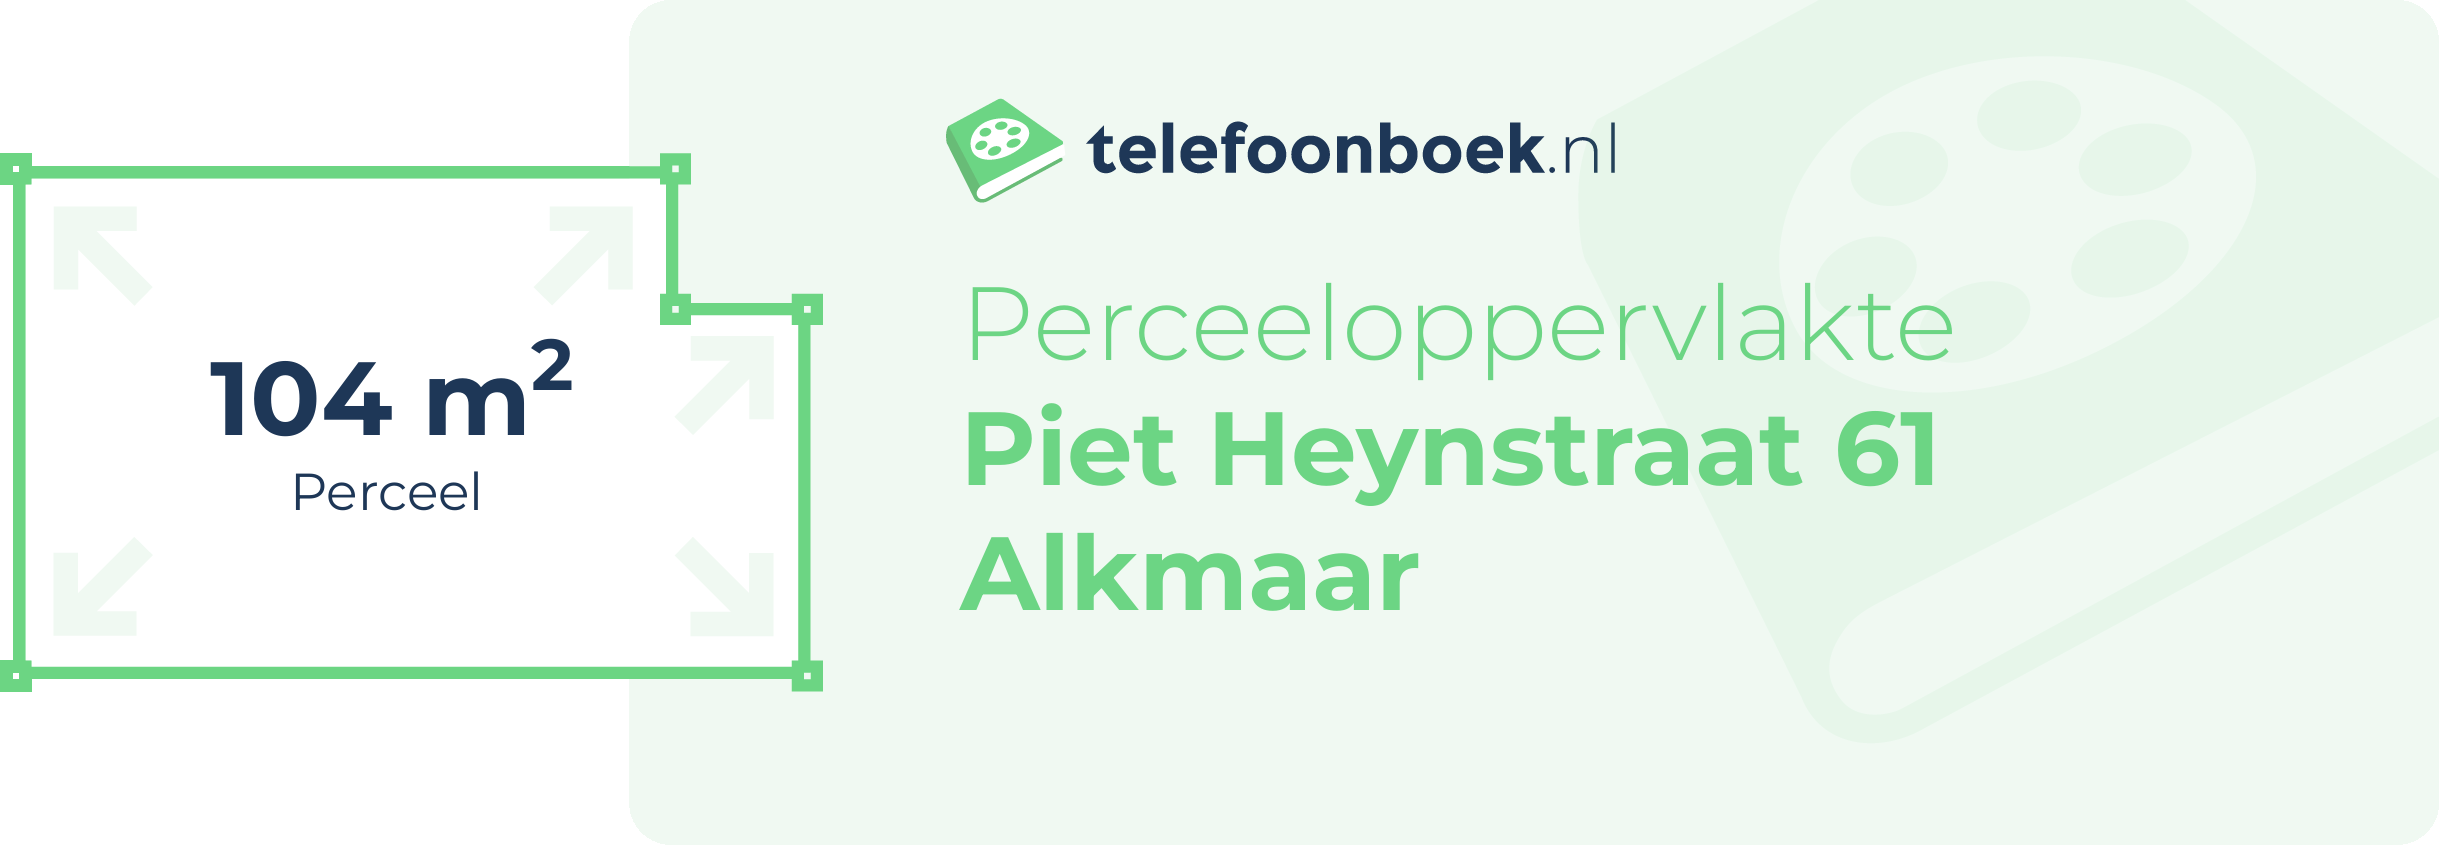 Perceeloppervlakte Piet Heynstraat 61 Alkmaar